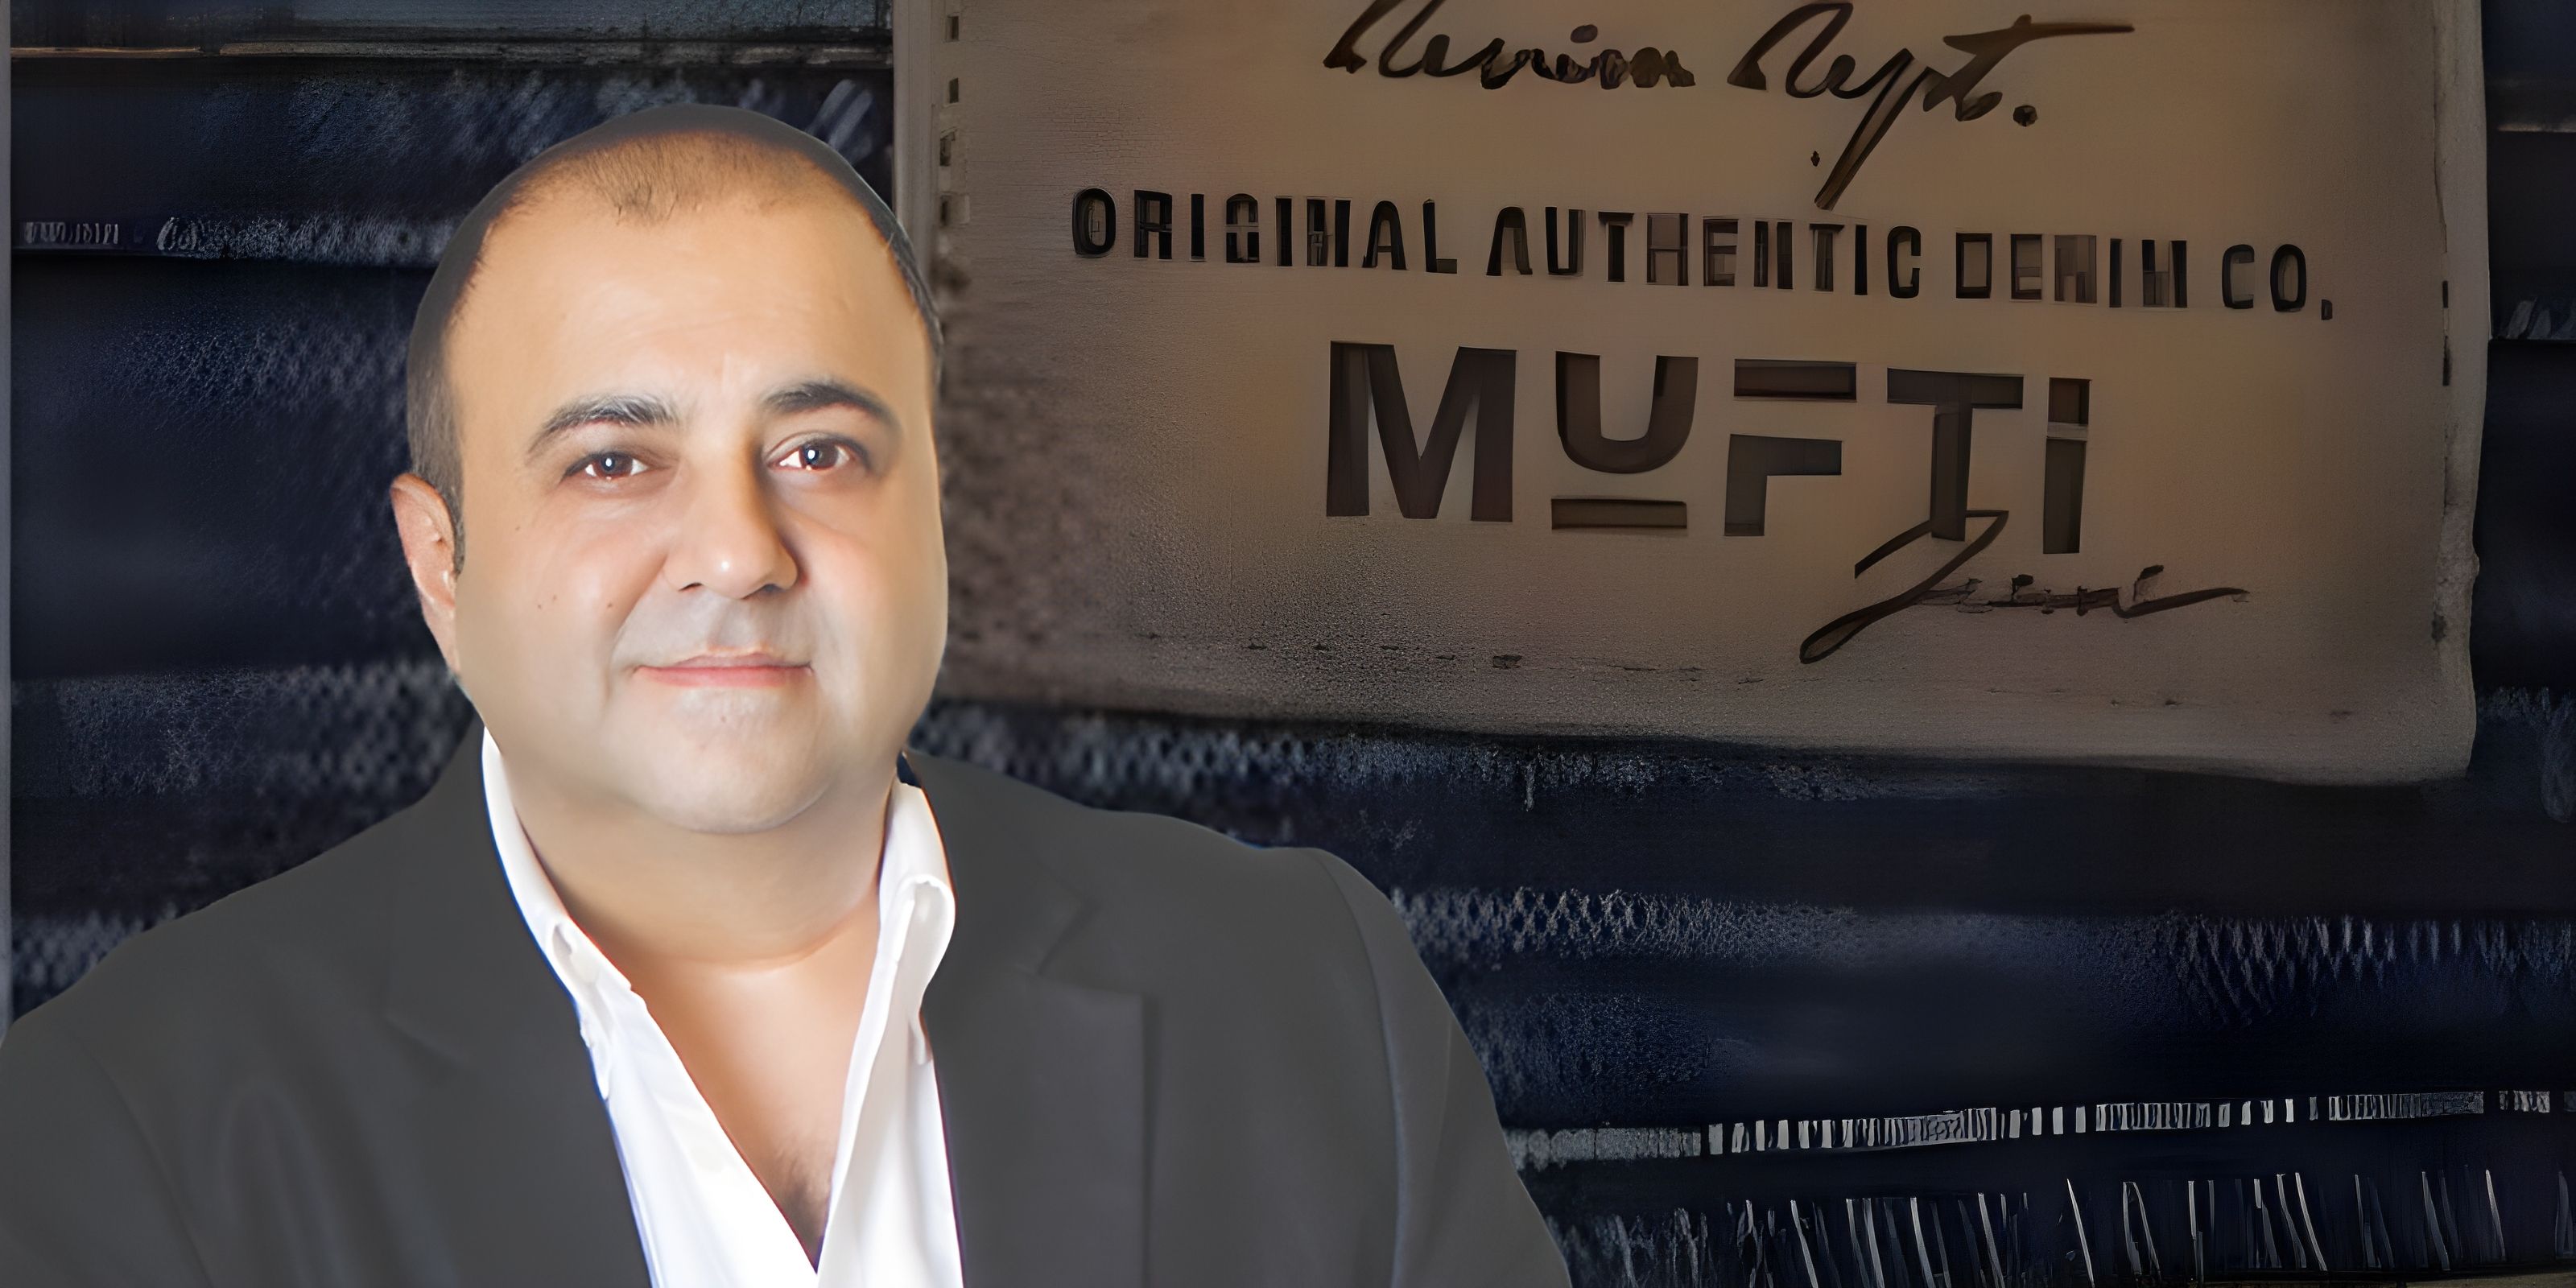 Mufti Menswear : IPO Overview